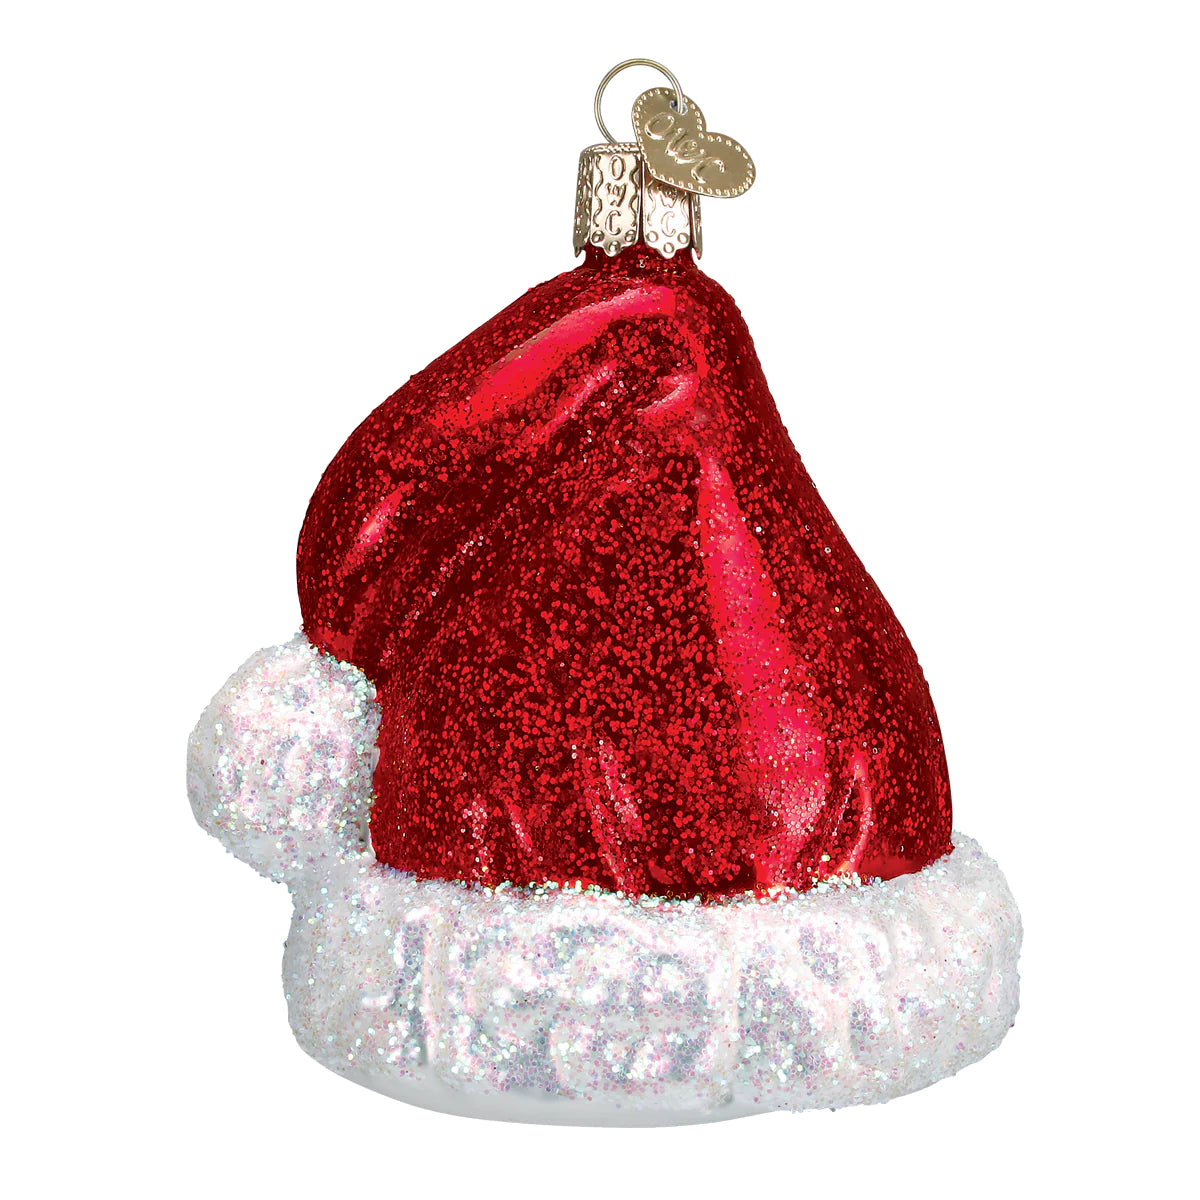 Old World Christmas Santa's Hat ornament 